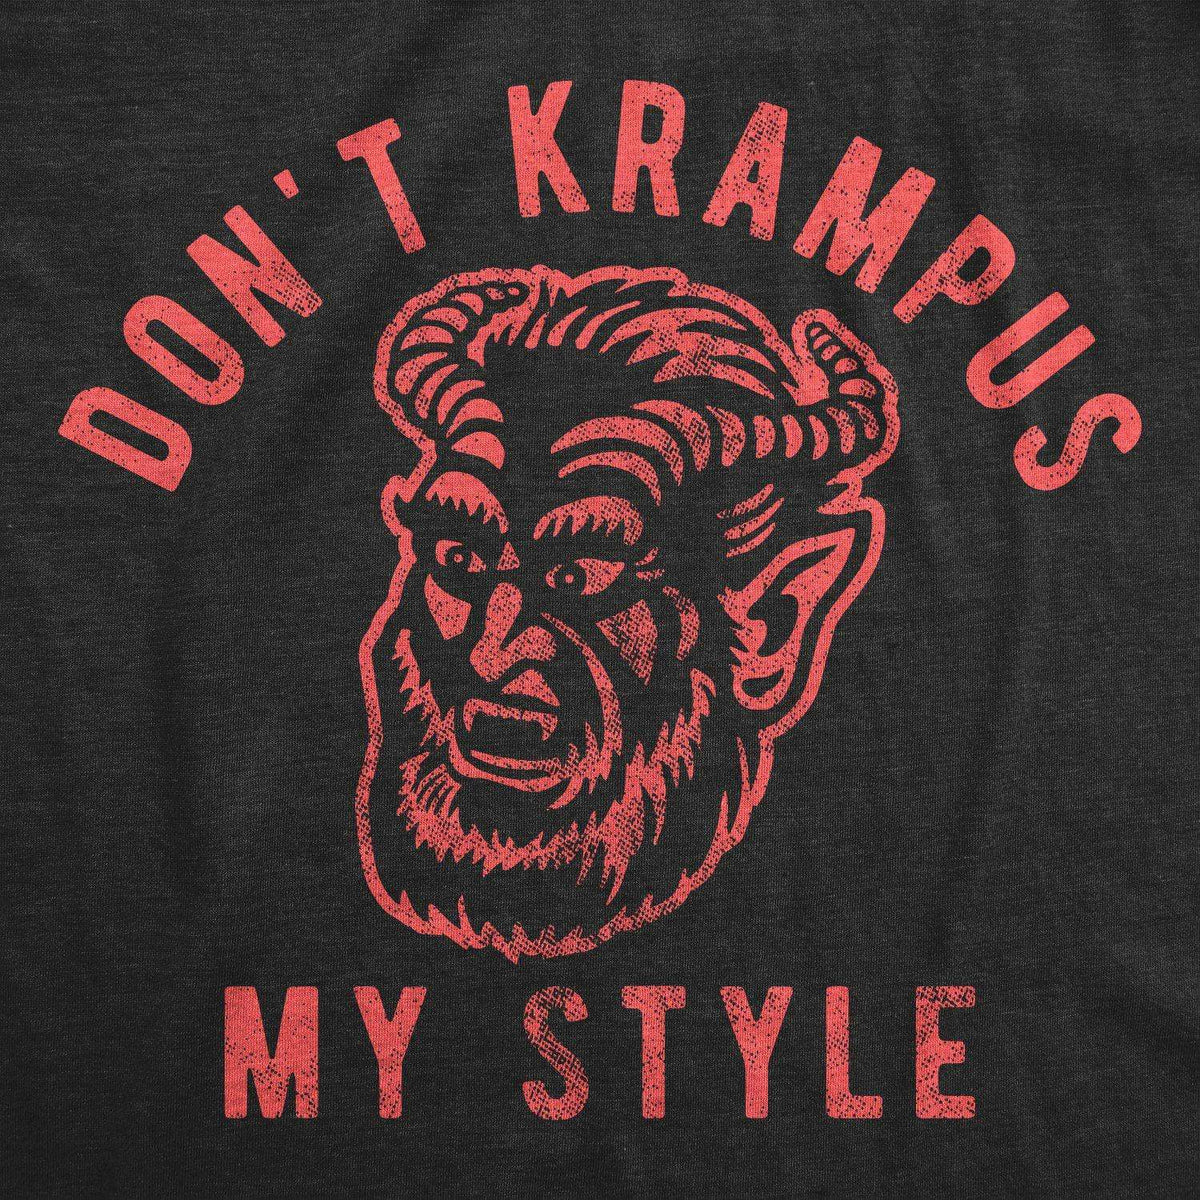 Don&#39;t Krampus My Style Men&#39;s Tshirt - Crazy Dog T-Shirts